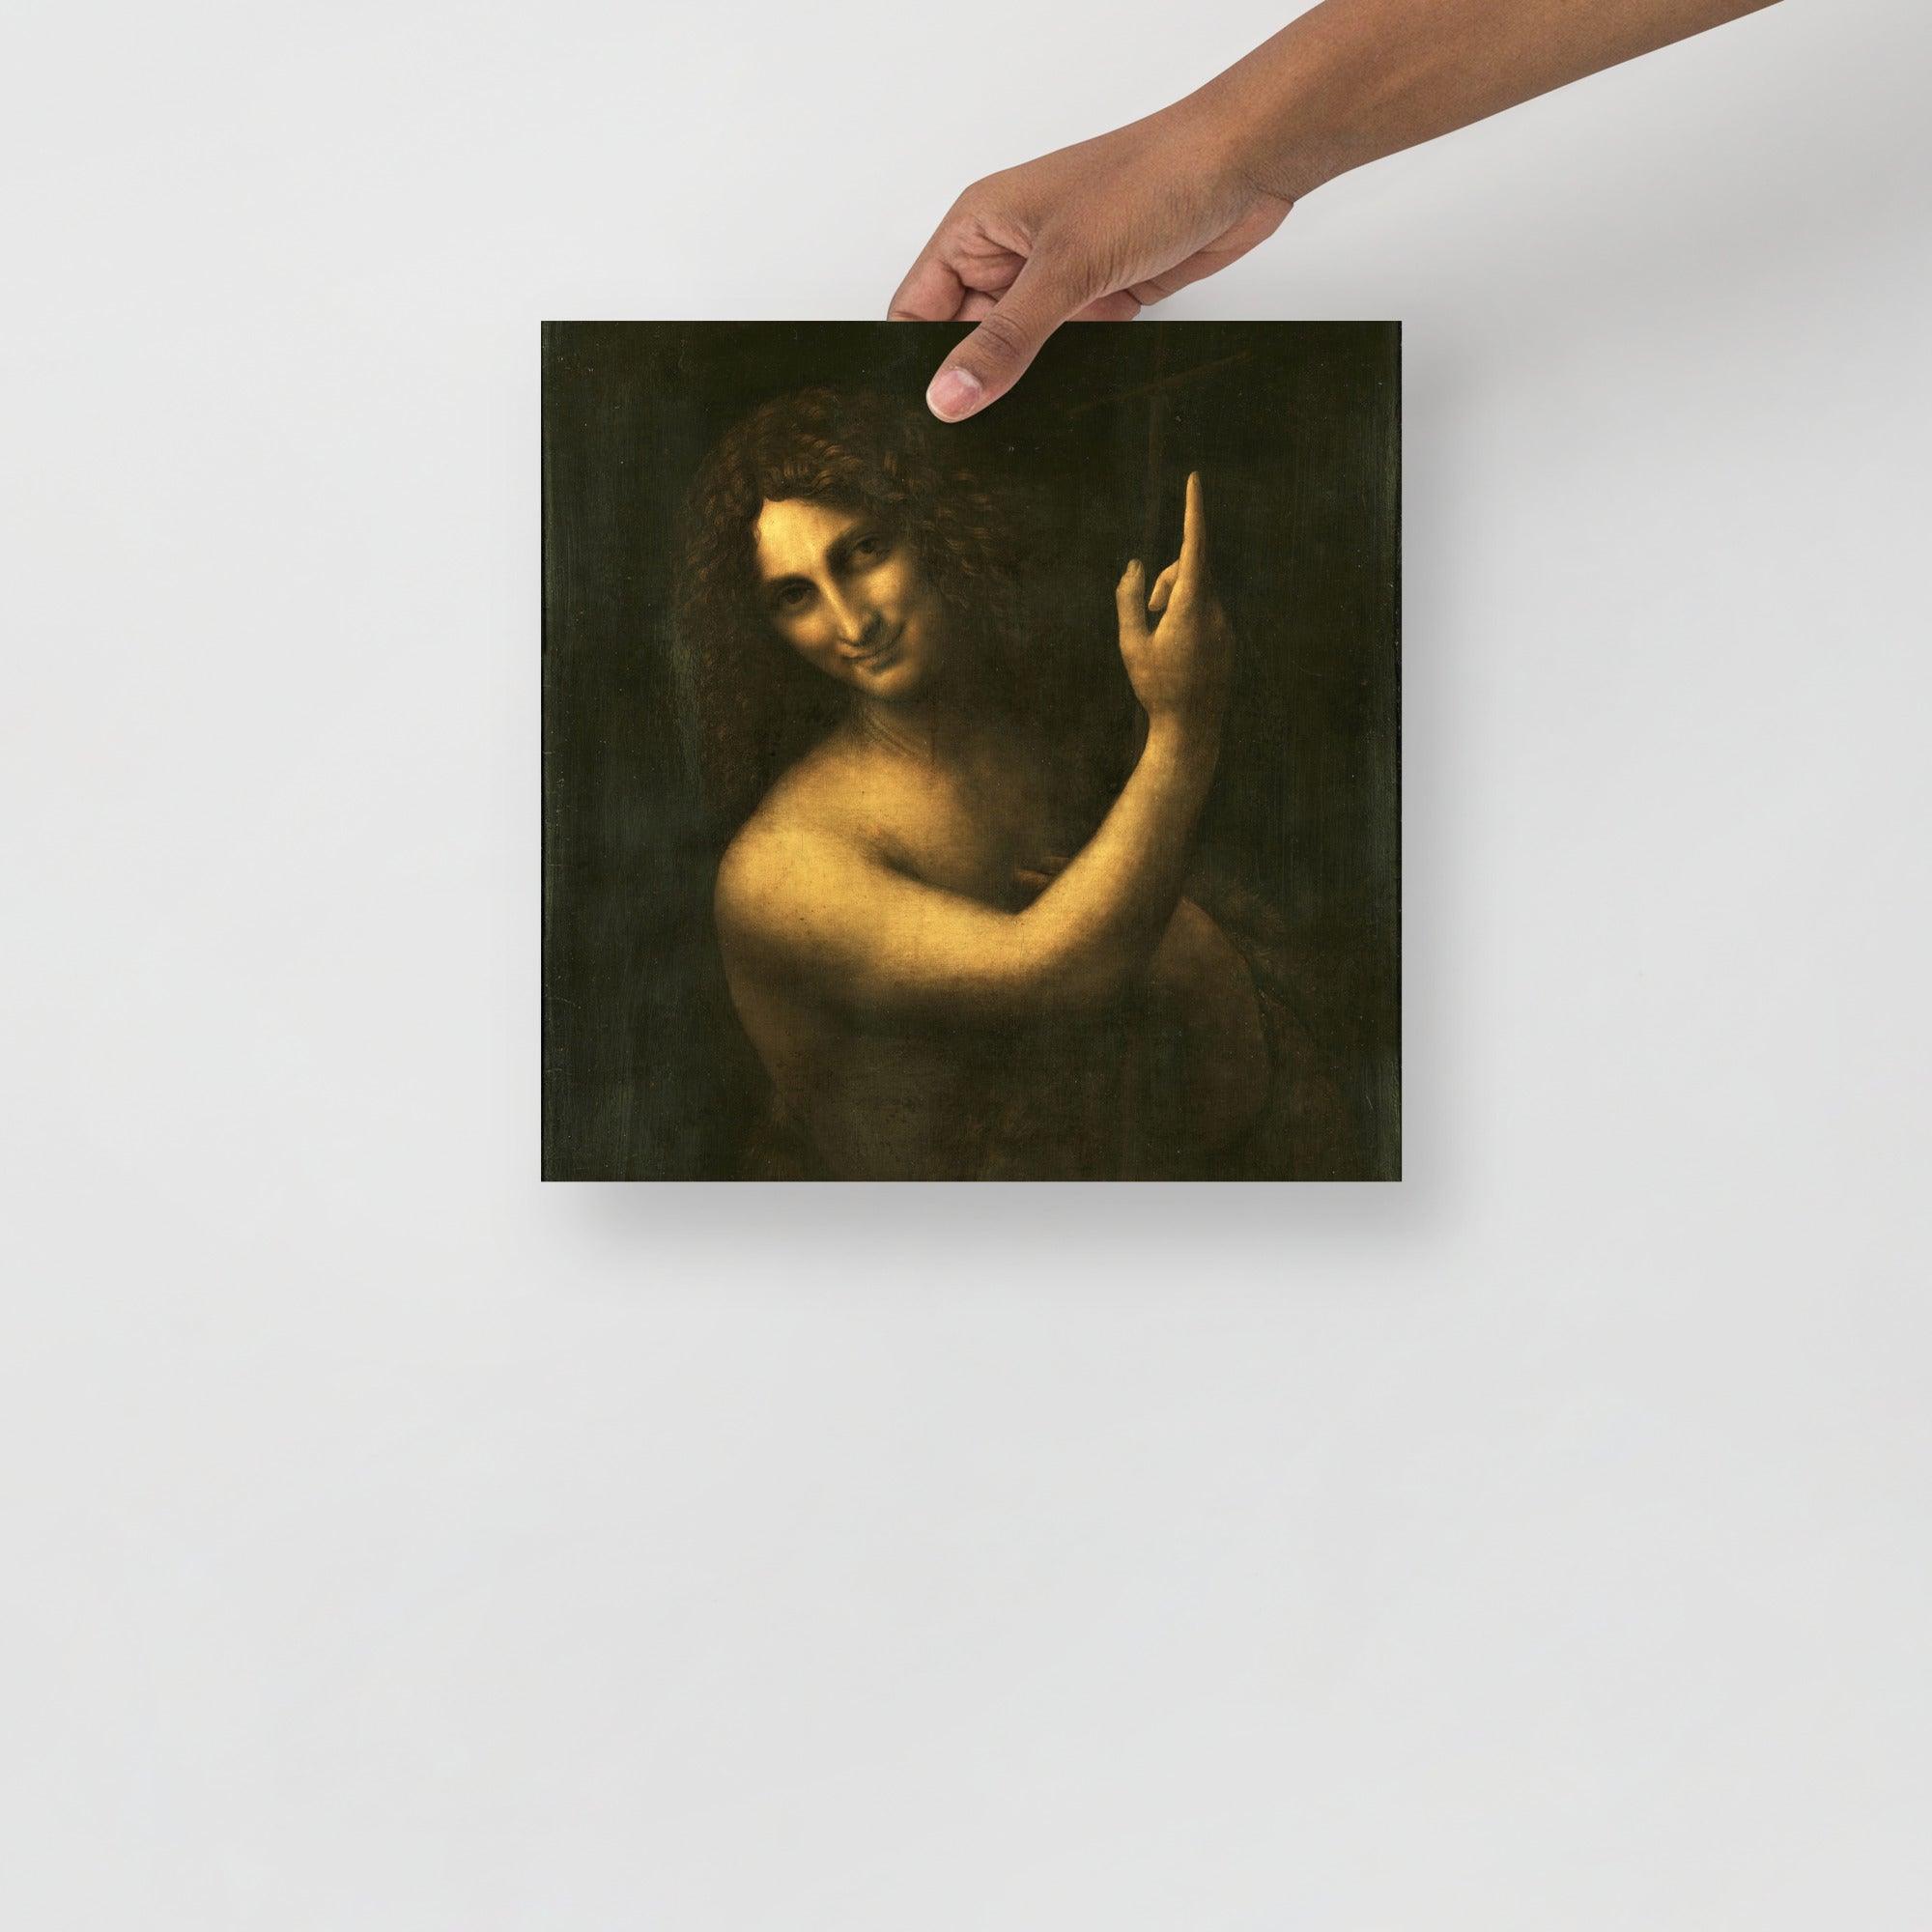 A Saint John the Baptist by Leonardo da Vinci poster on a plain backdrop in size 12x12”.